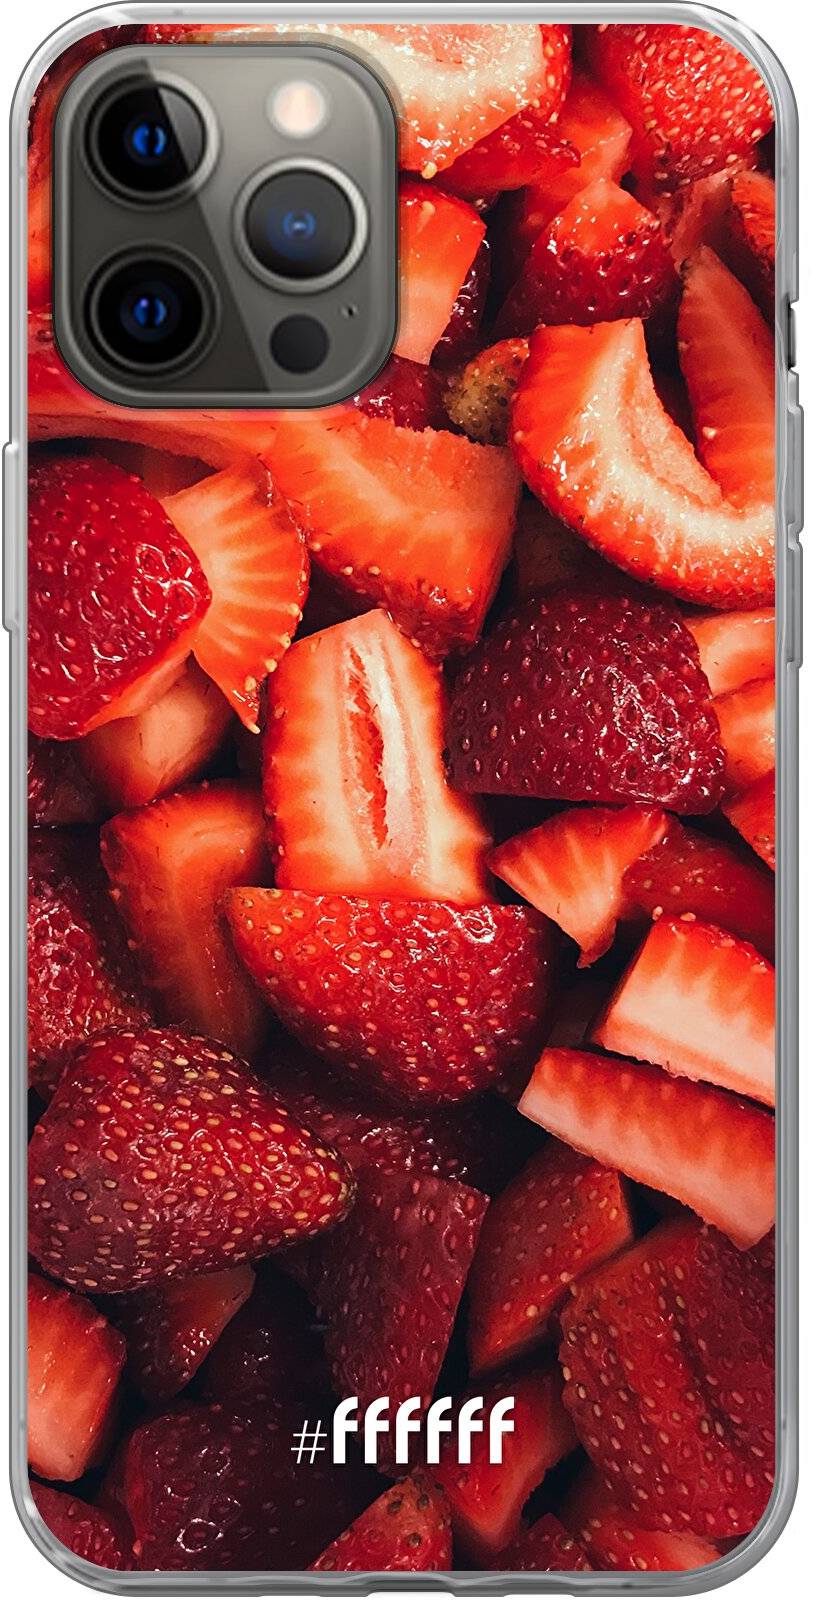 Strawberry Fields iPhone 12 Pro Max